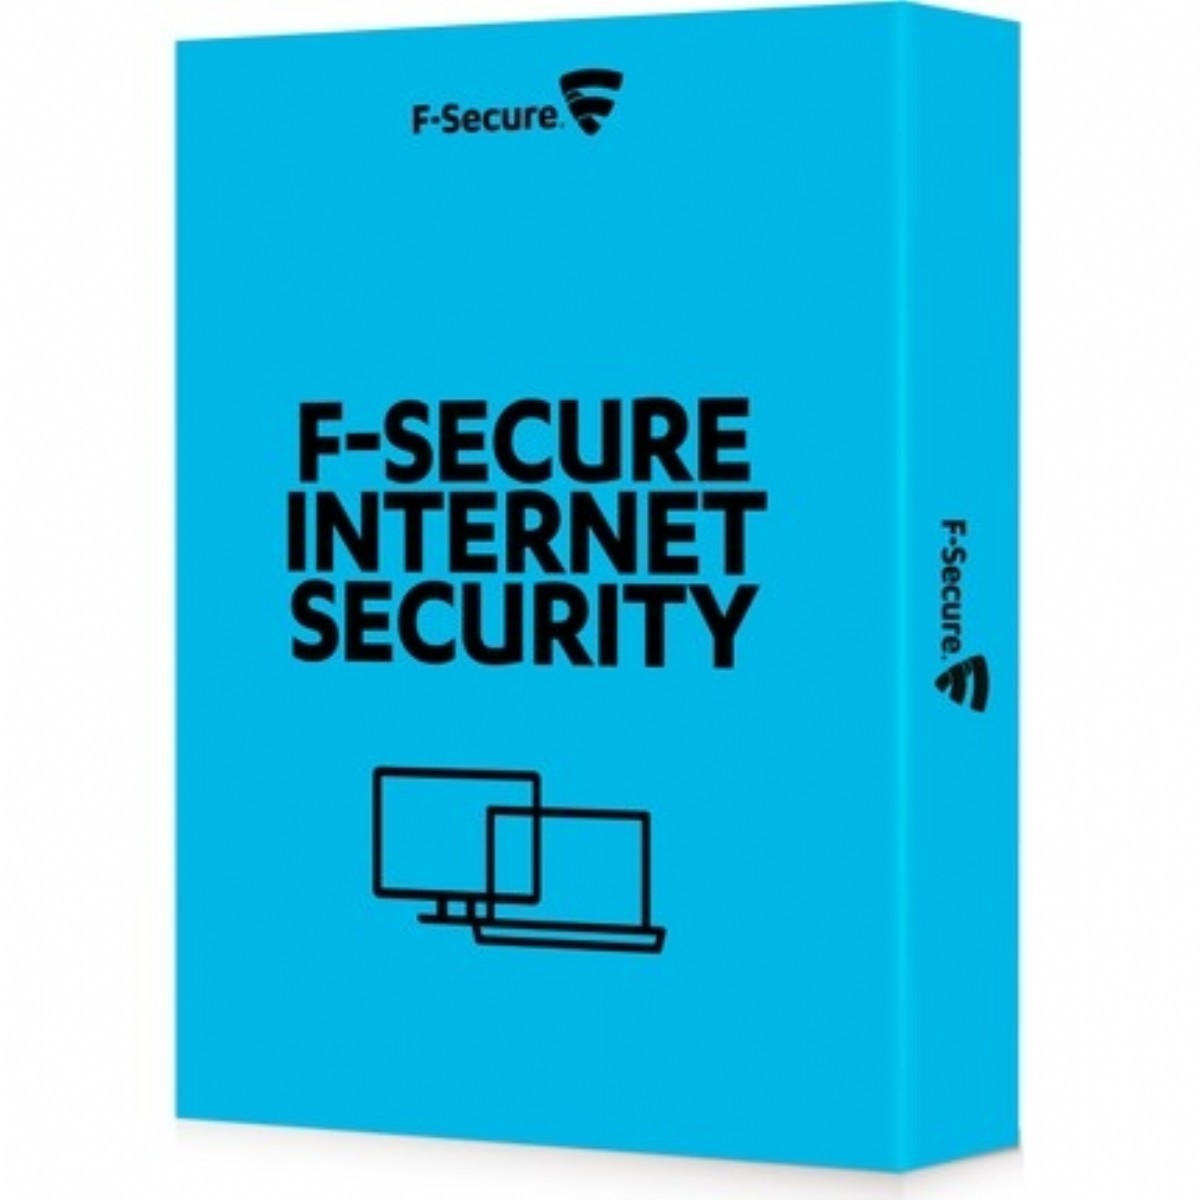 AntivirÃ¼s | F-Secure Antivirus + Internet Security (1 yÄ±l, 1 kullanÄ±cÄ±) | antv13 | AntivirÃ¼s,virÃ¼s,internet security,gÃ¼venlik,hata | 